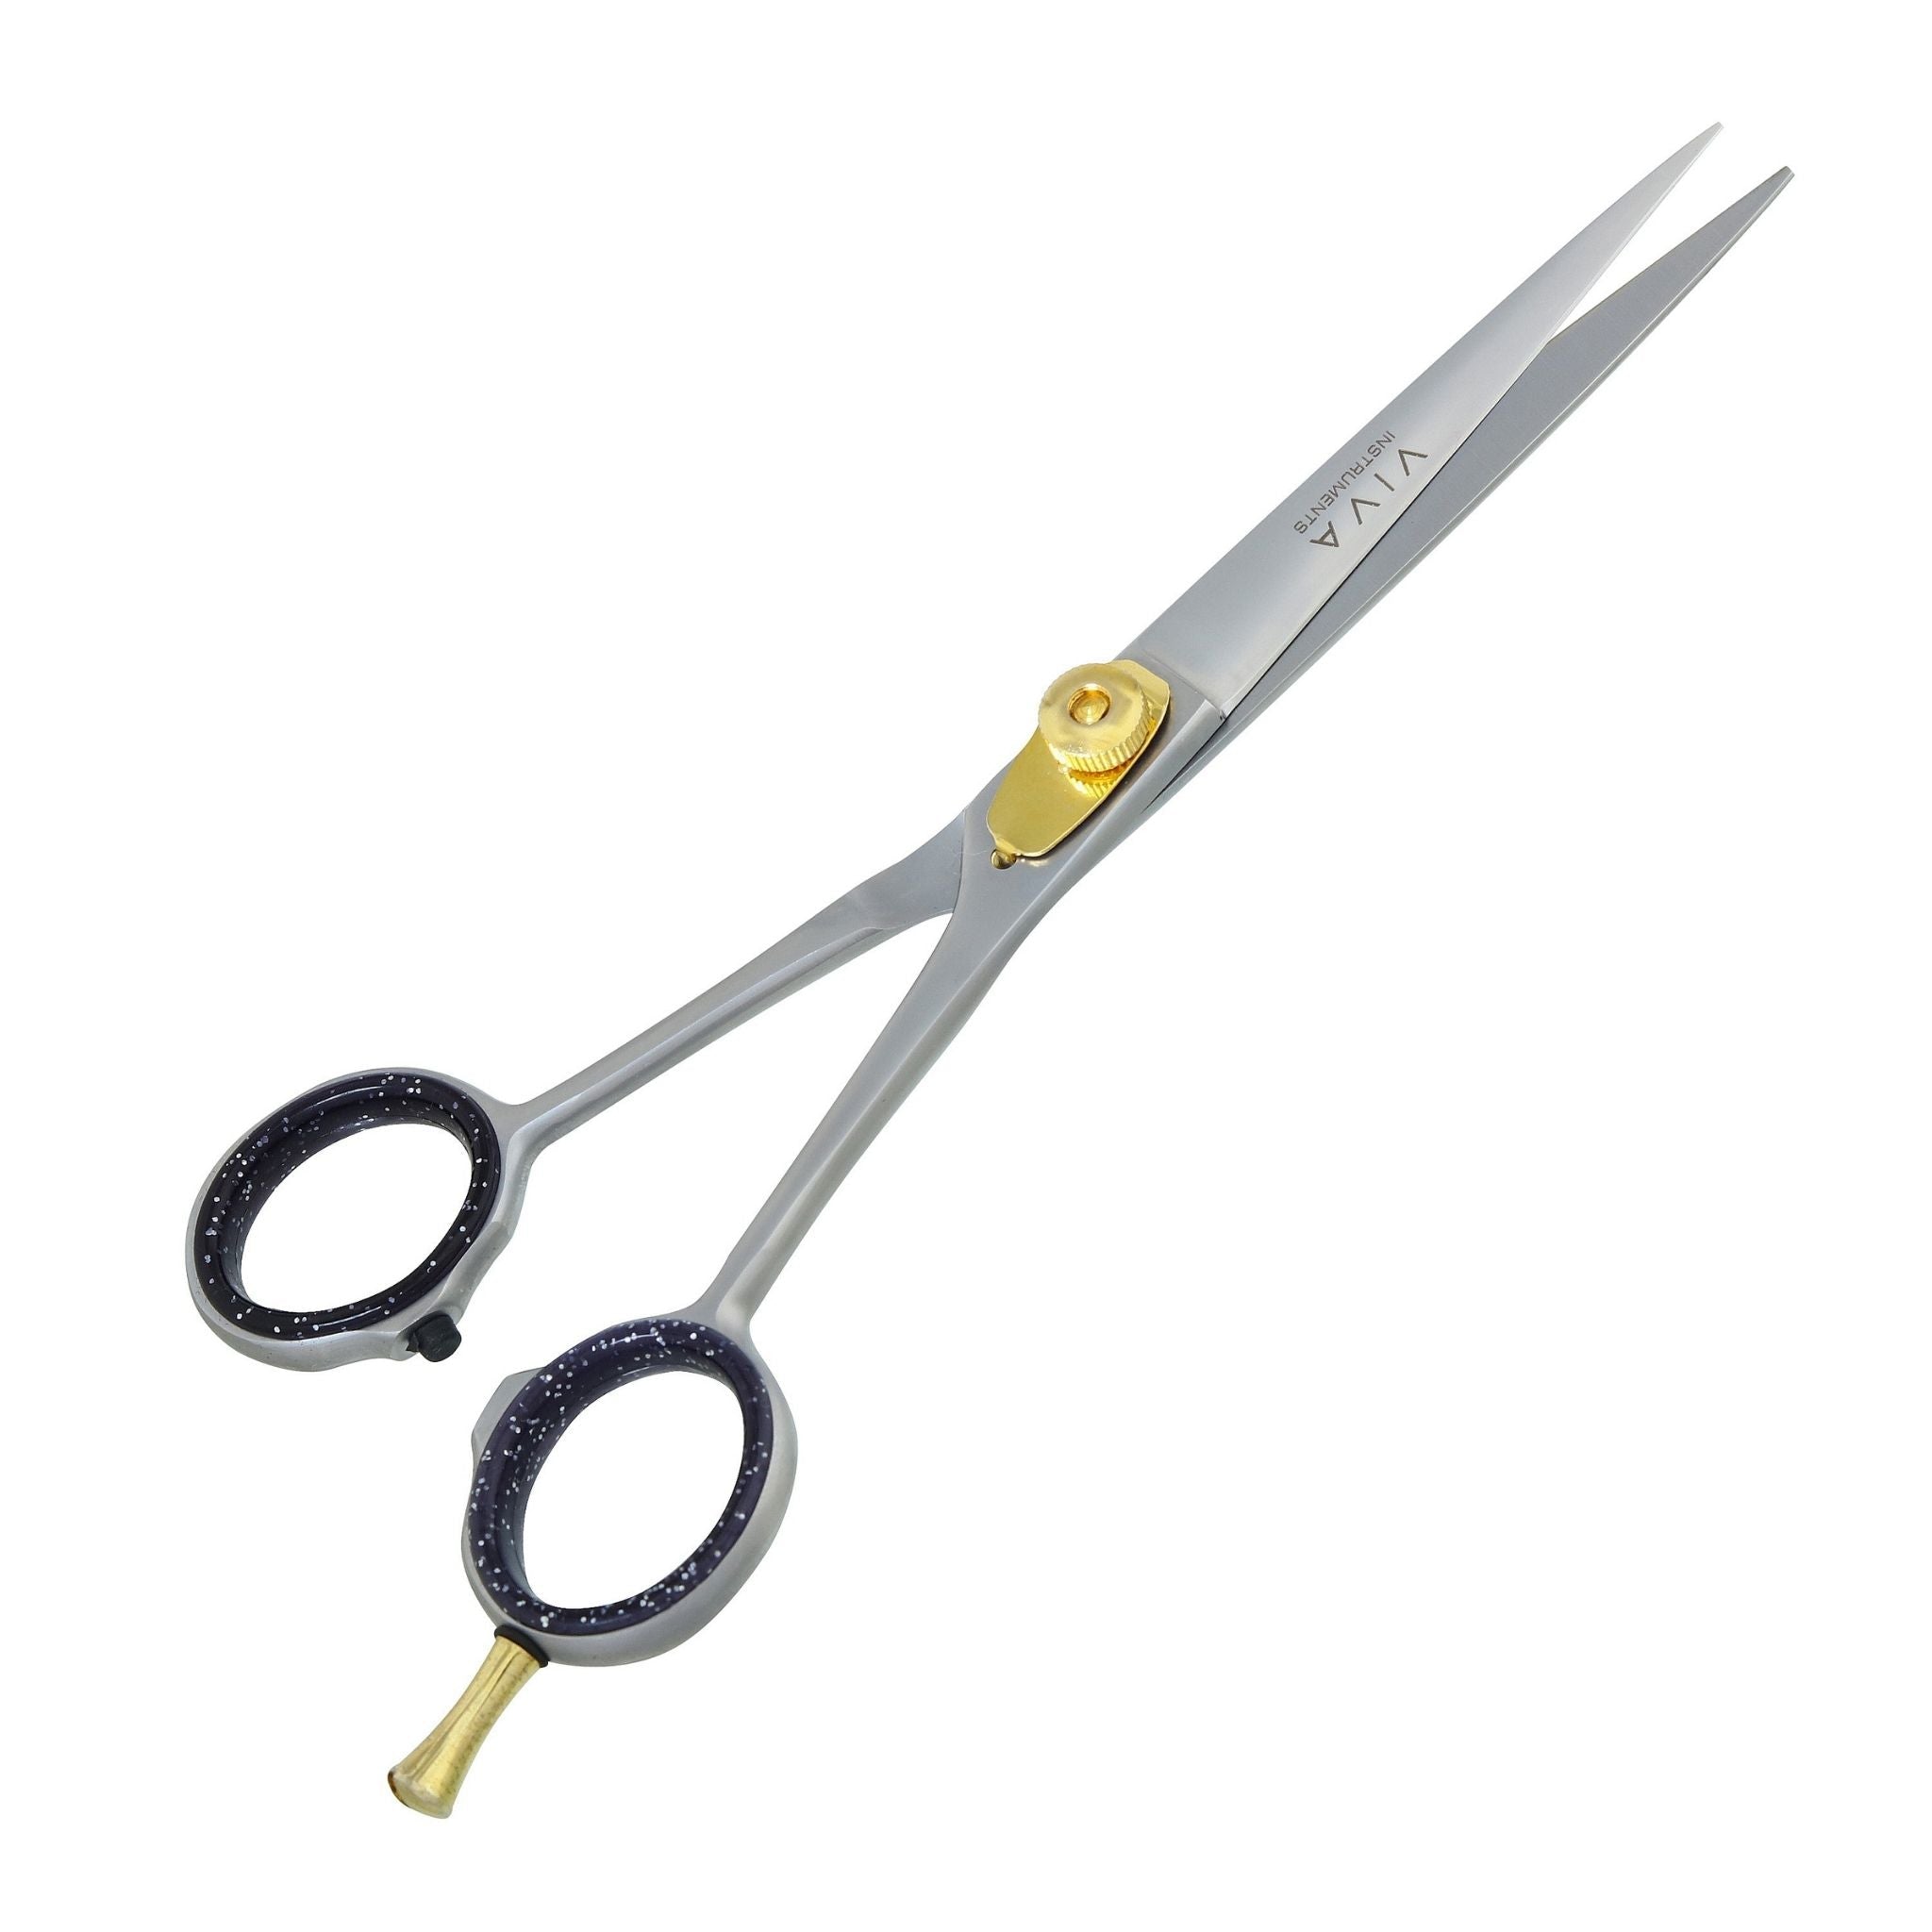 Hair Scissors - Hairdressing Cutting Scissors 6.5'' Inch - Professional